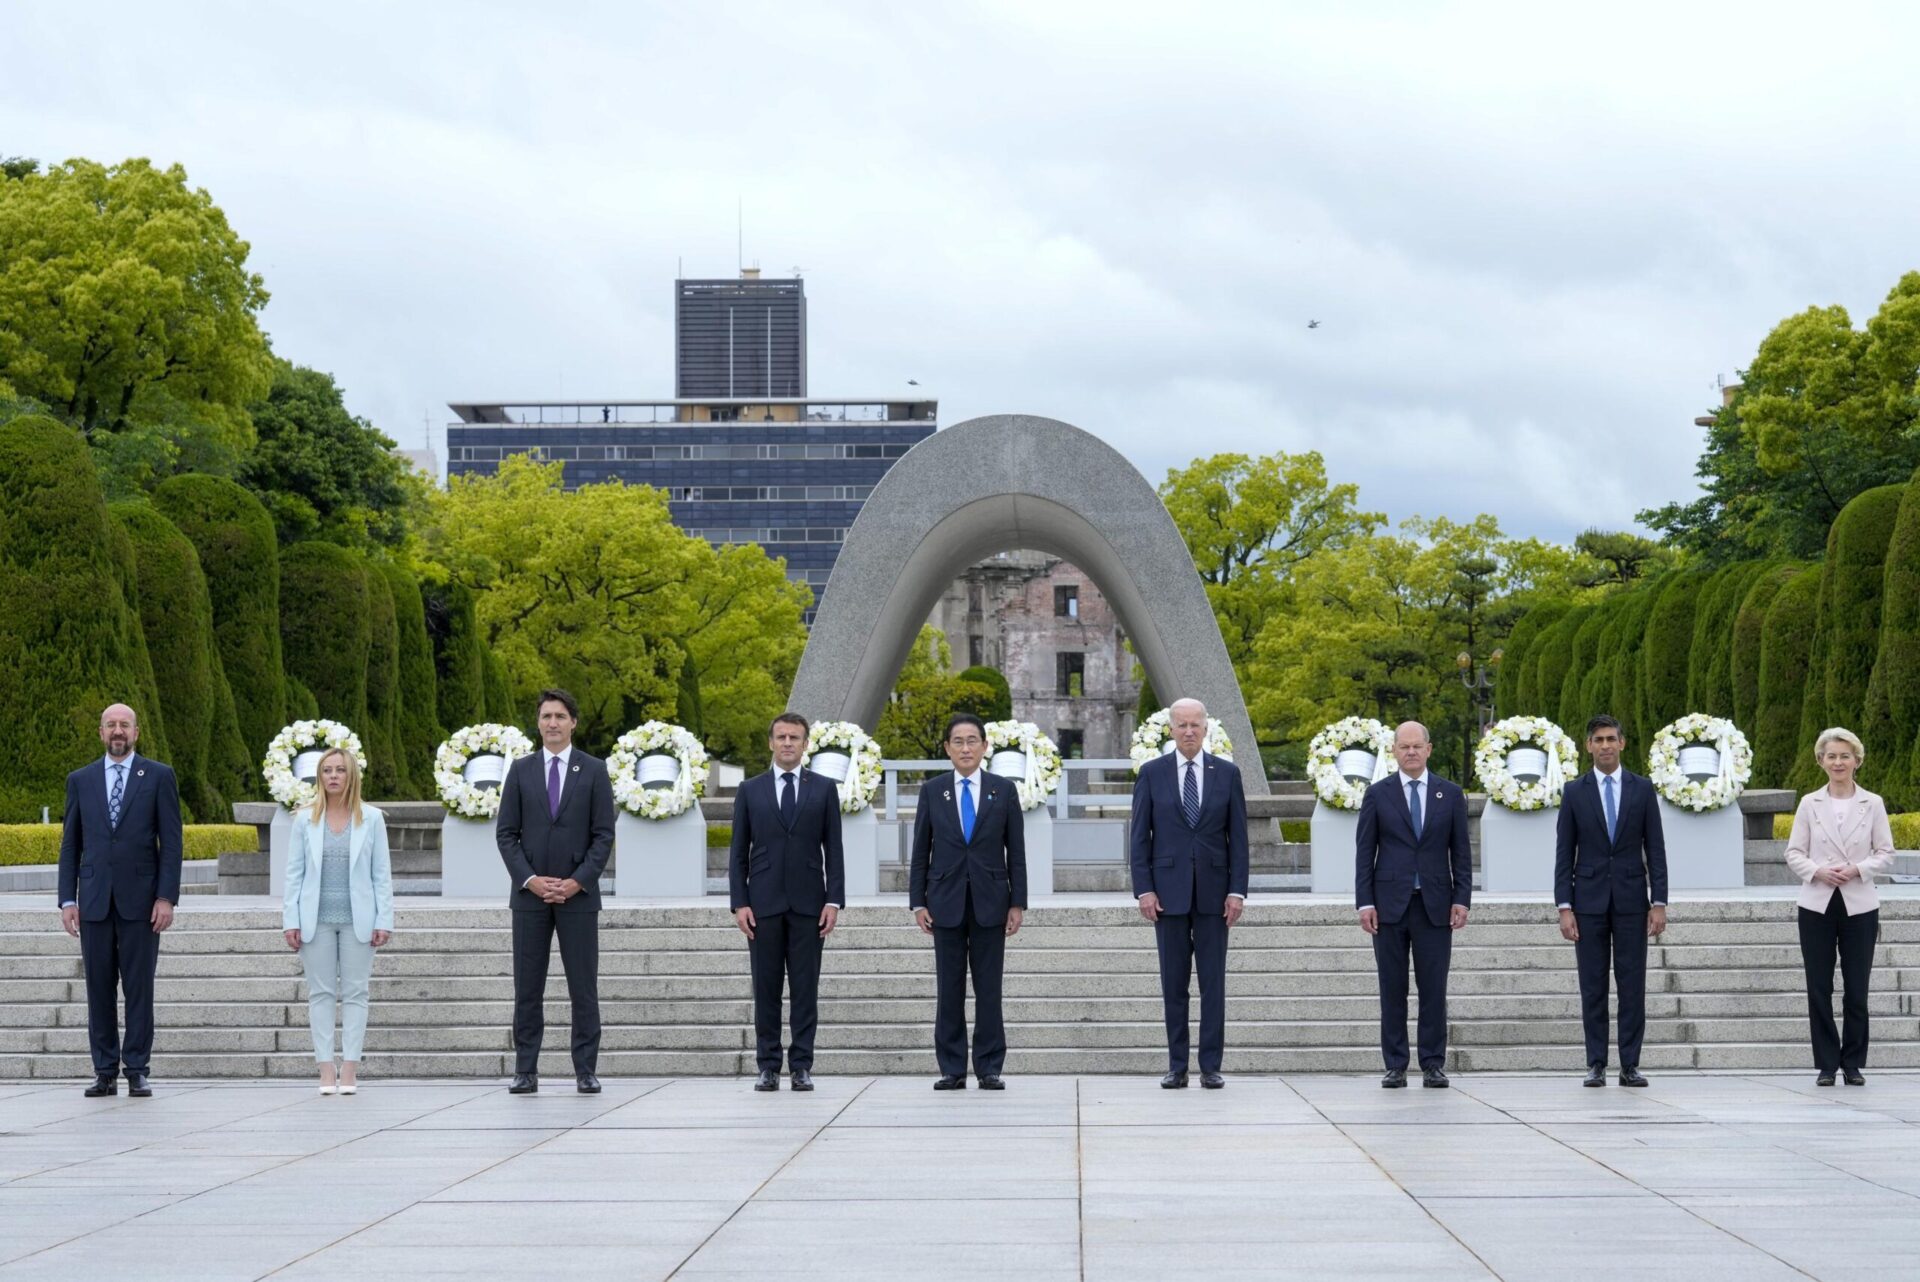 Los sobrevivientes de la bomba atómica ven la cumbre del G7 en Hiroshima como un “remolino de esperanza” para el desarme nuclear